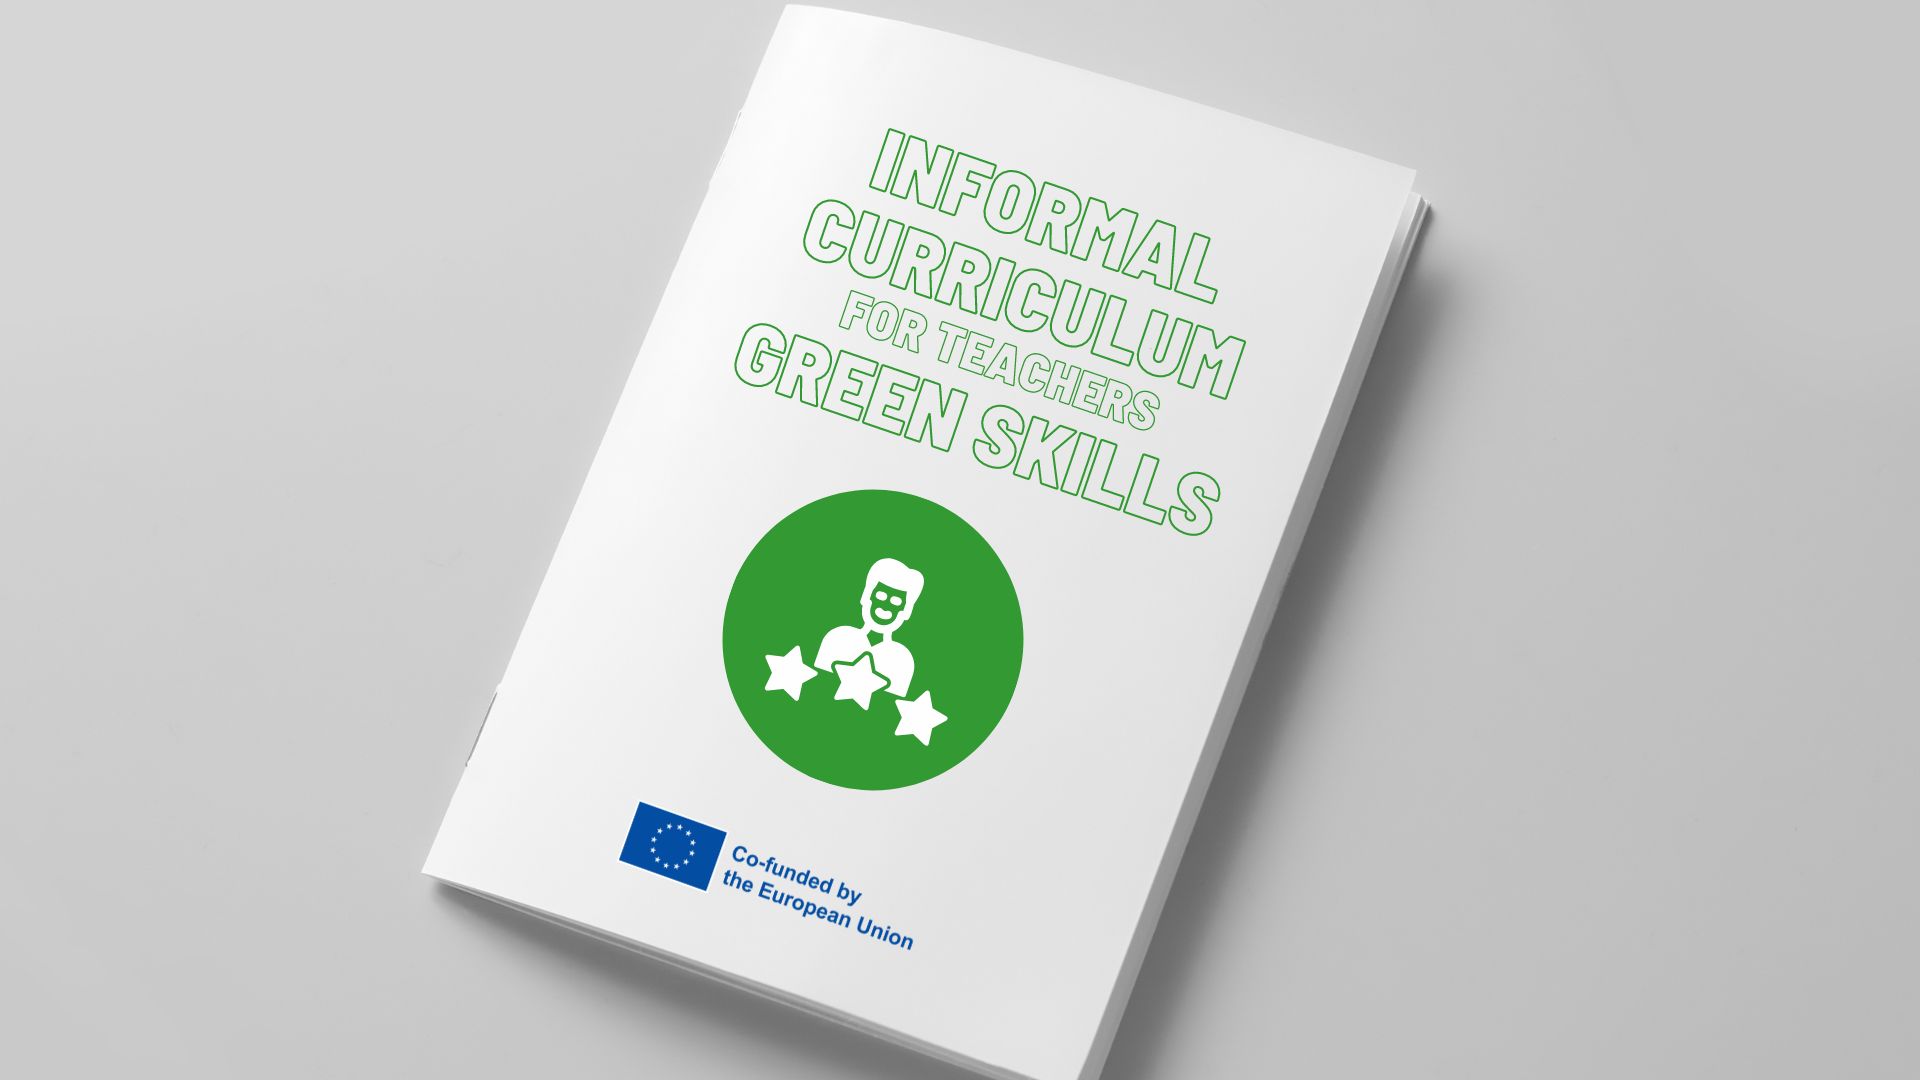 Informal curriculum for teachers on green skills